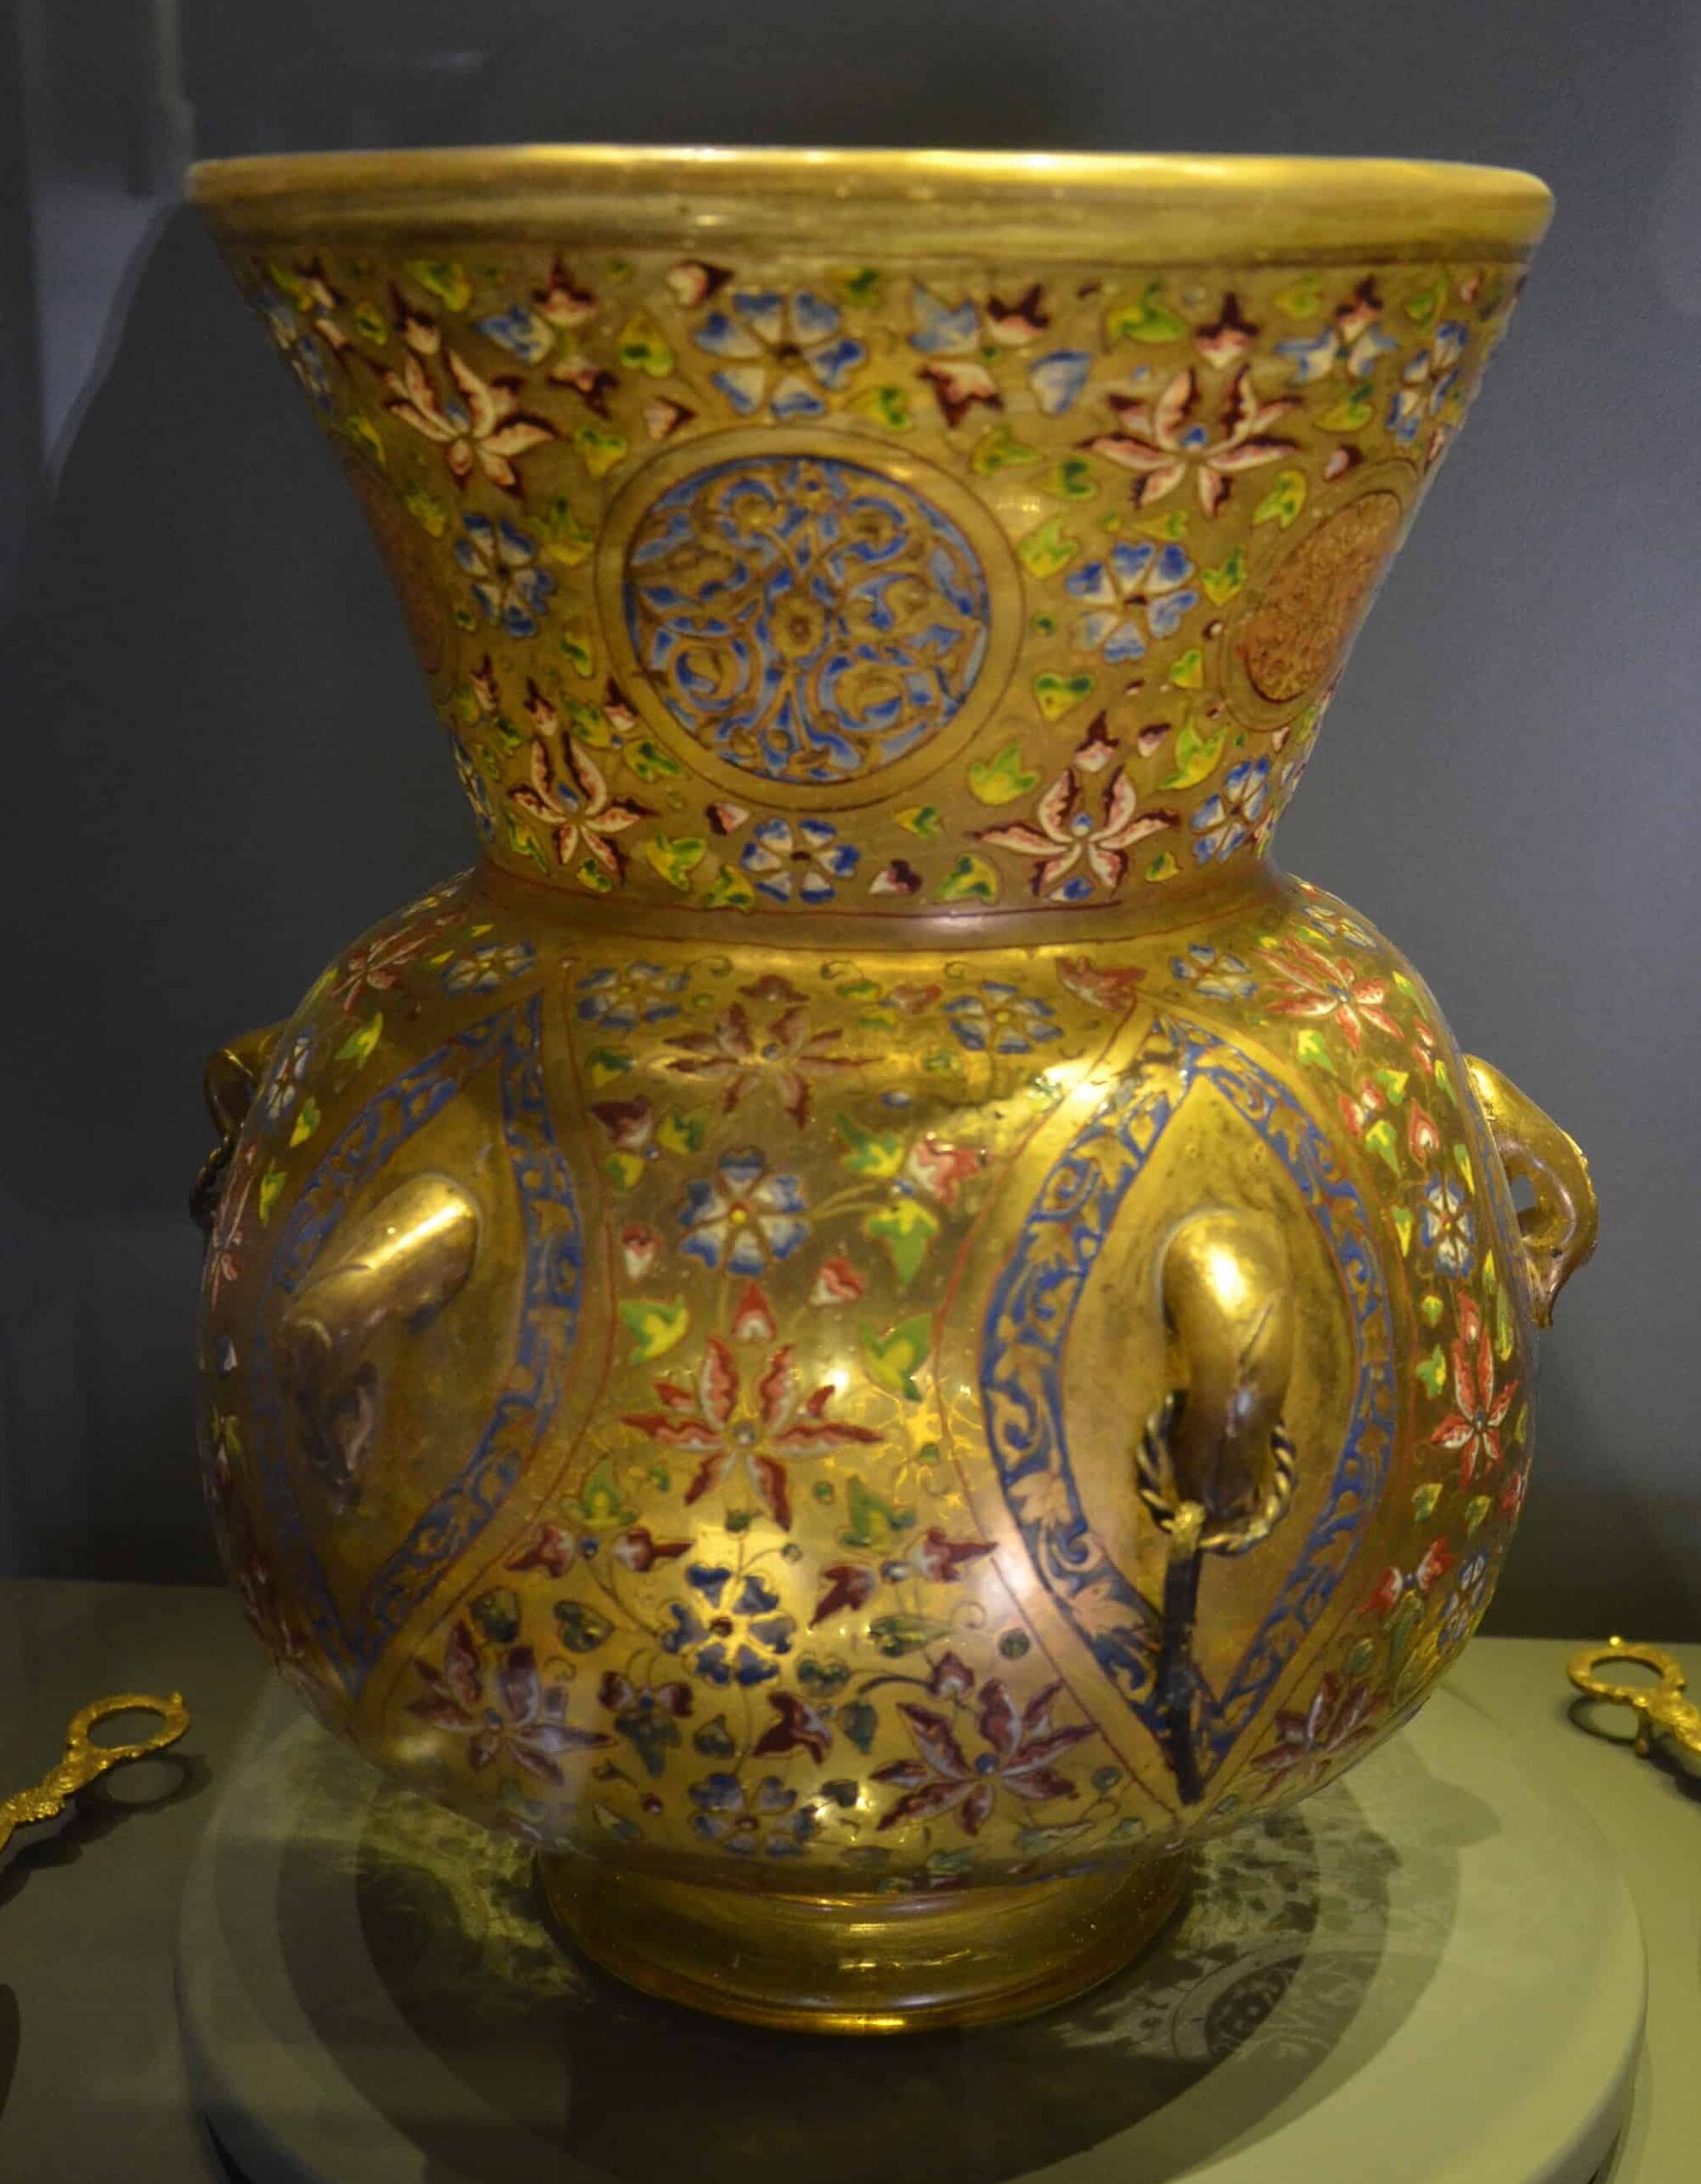 Glass lamp at the Mevlana Museum in Konya, Turkey